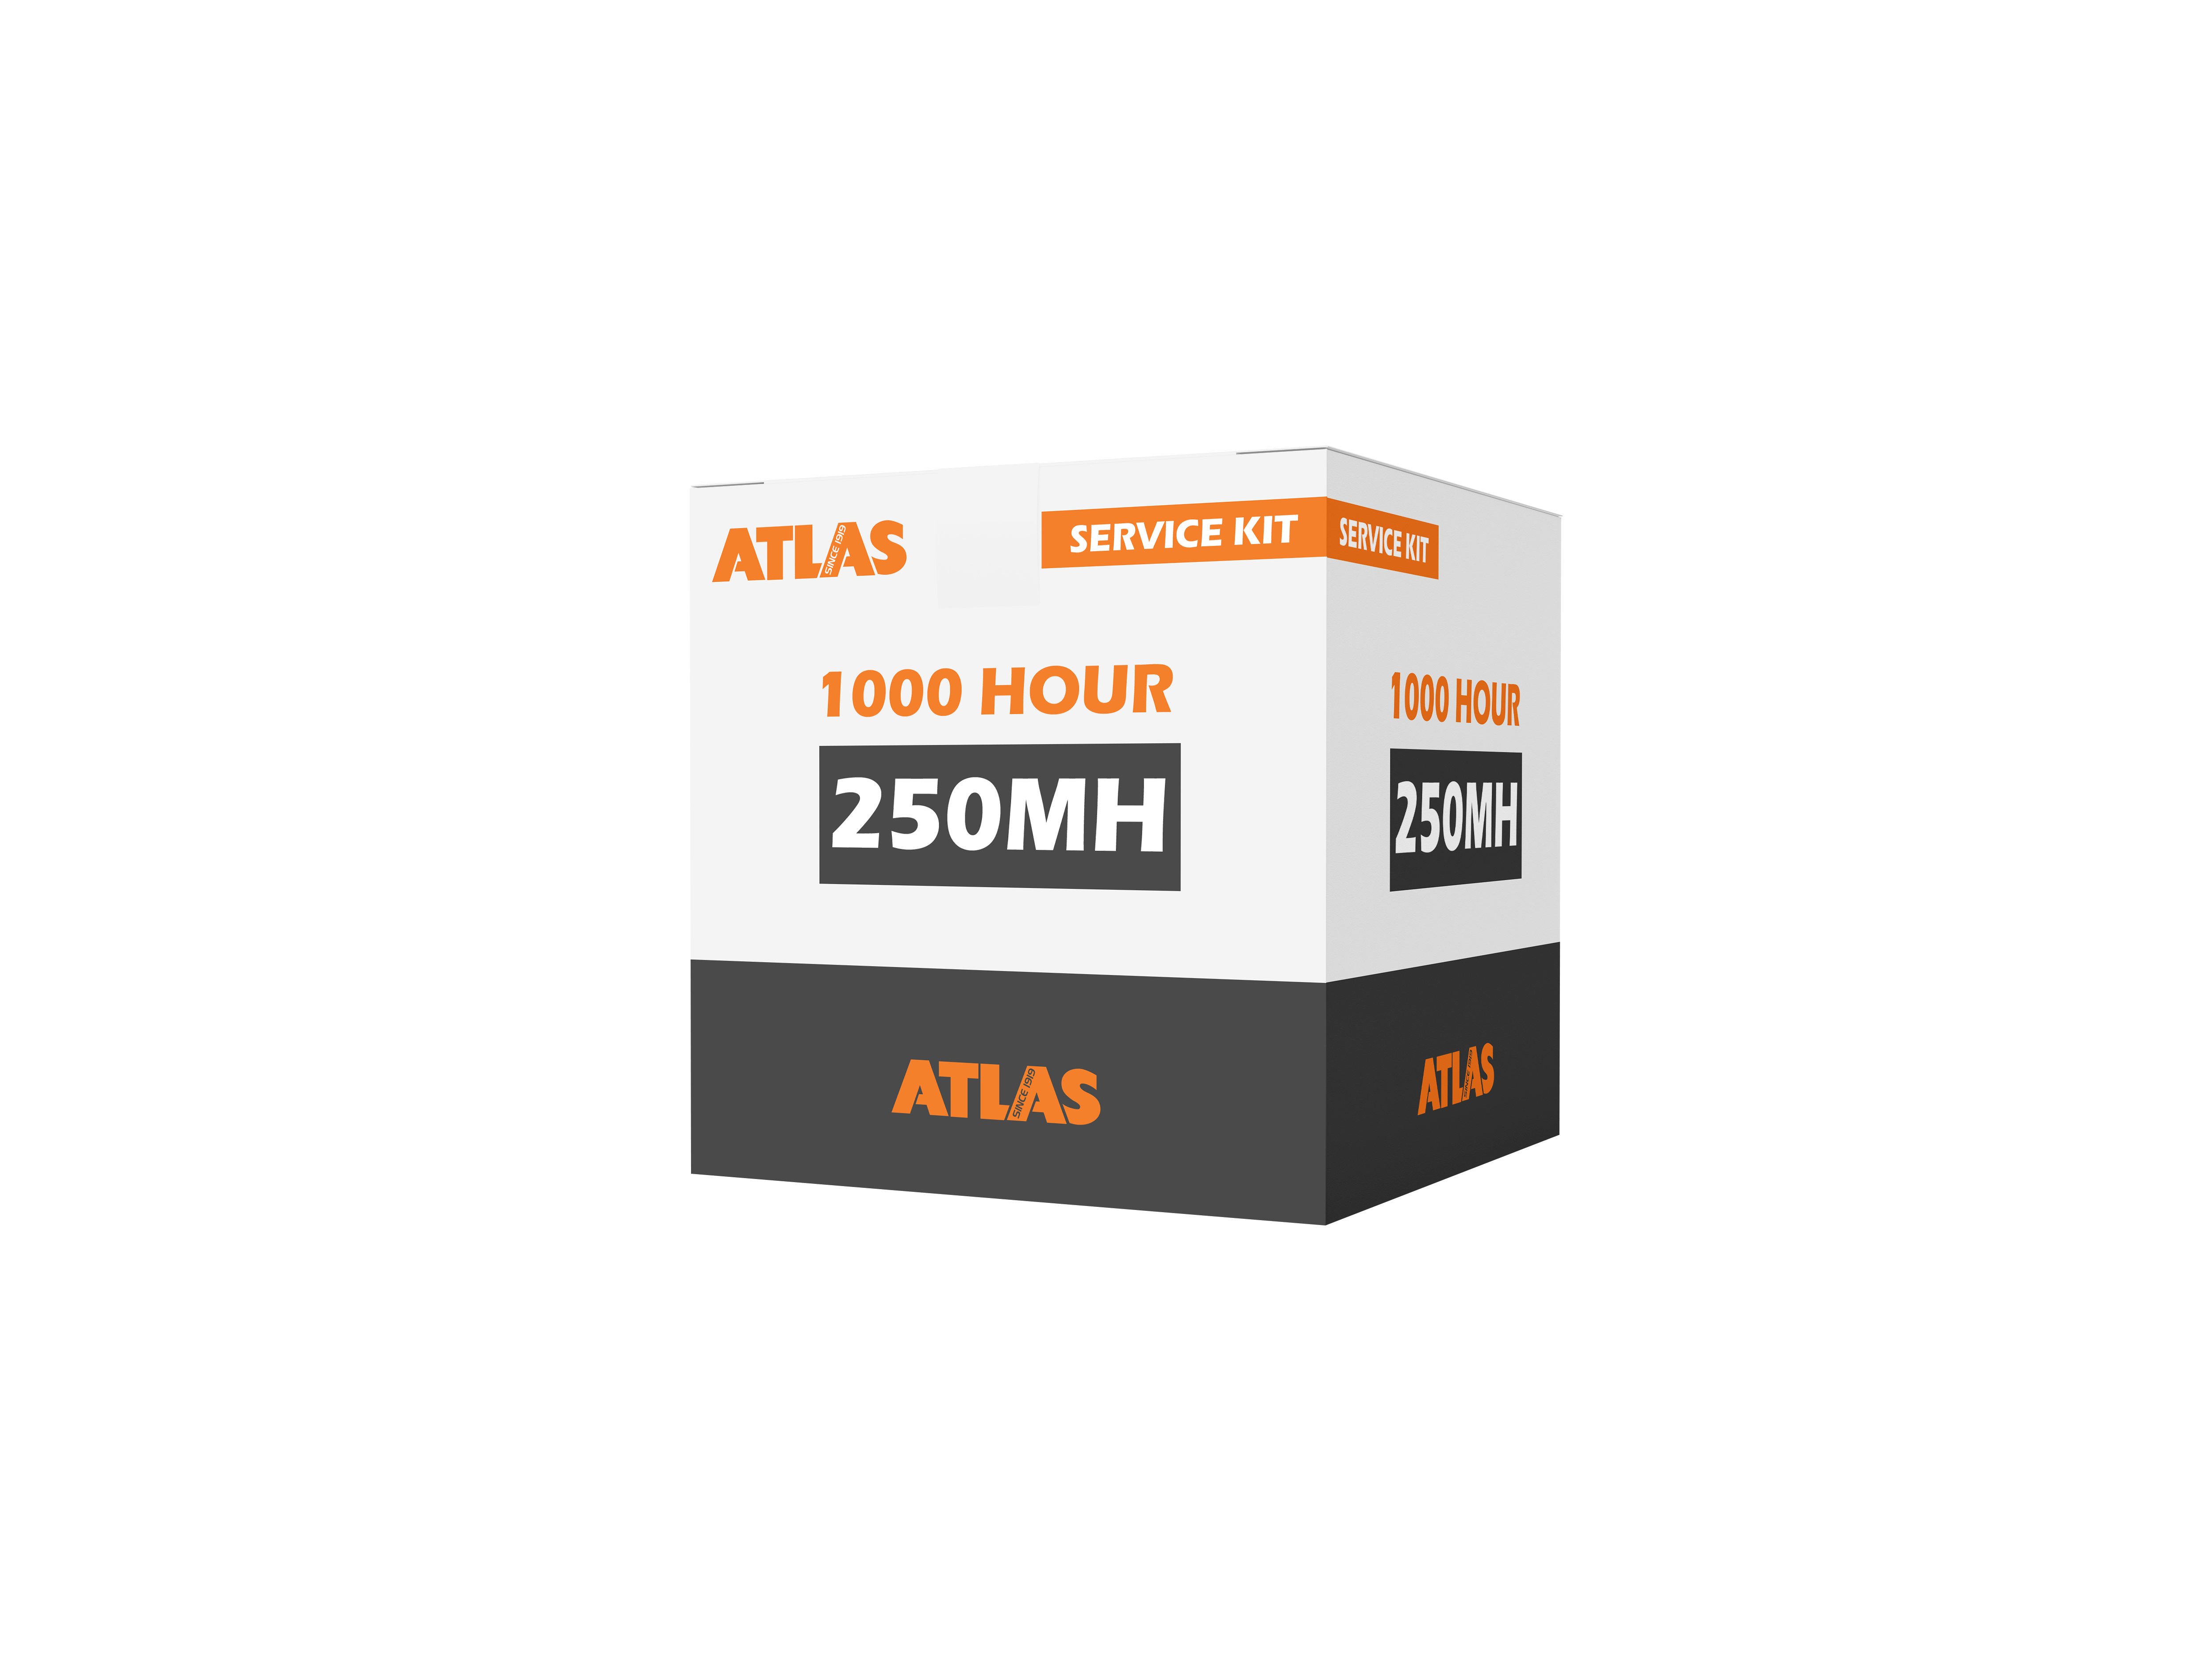 Atlas 250MH 1000 Hour Service Kit (252 Series)